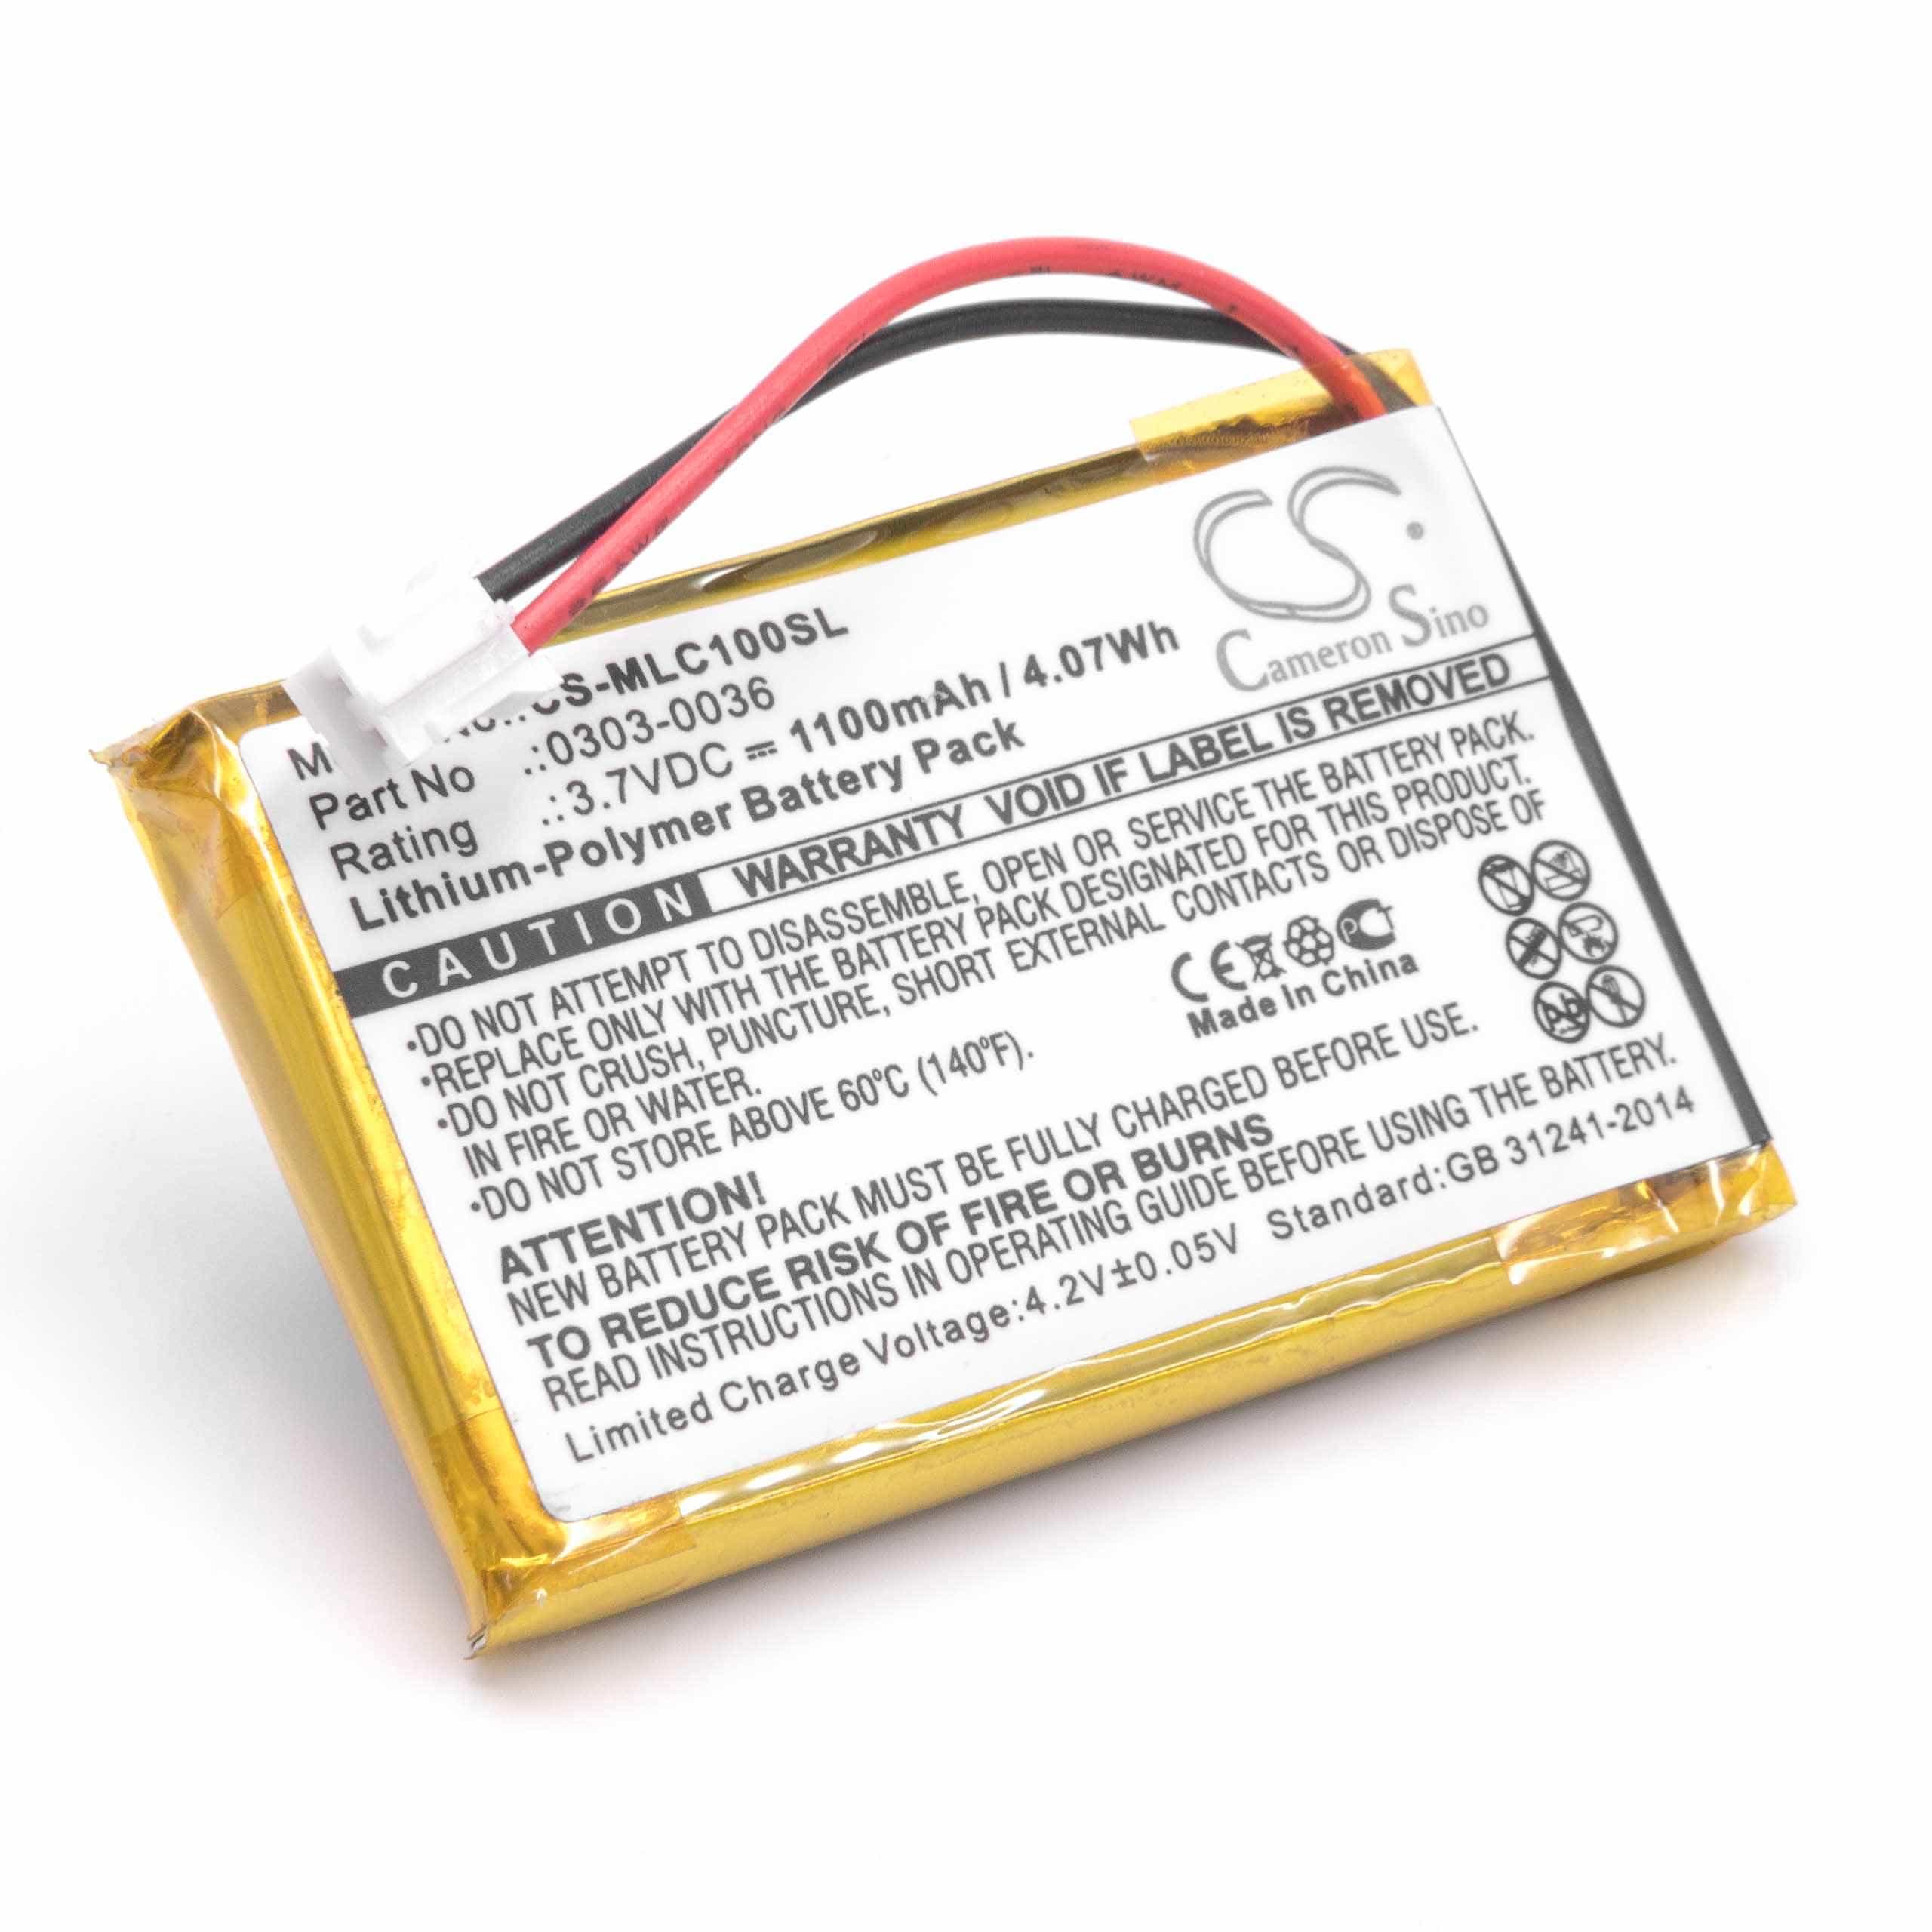 Laser Battery Replacement for Minelab 0303-0036 - 1100mAh 3.7V Li-polymer